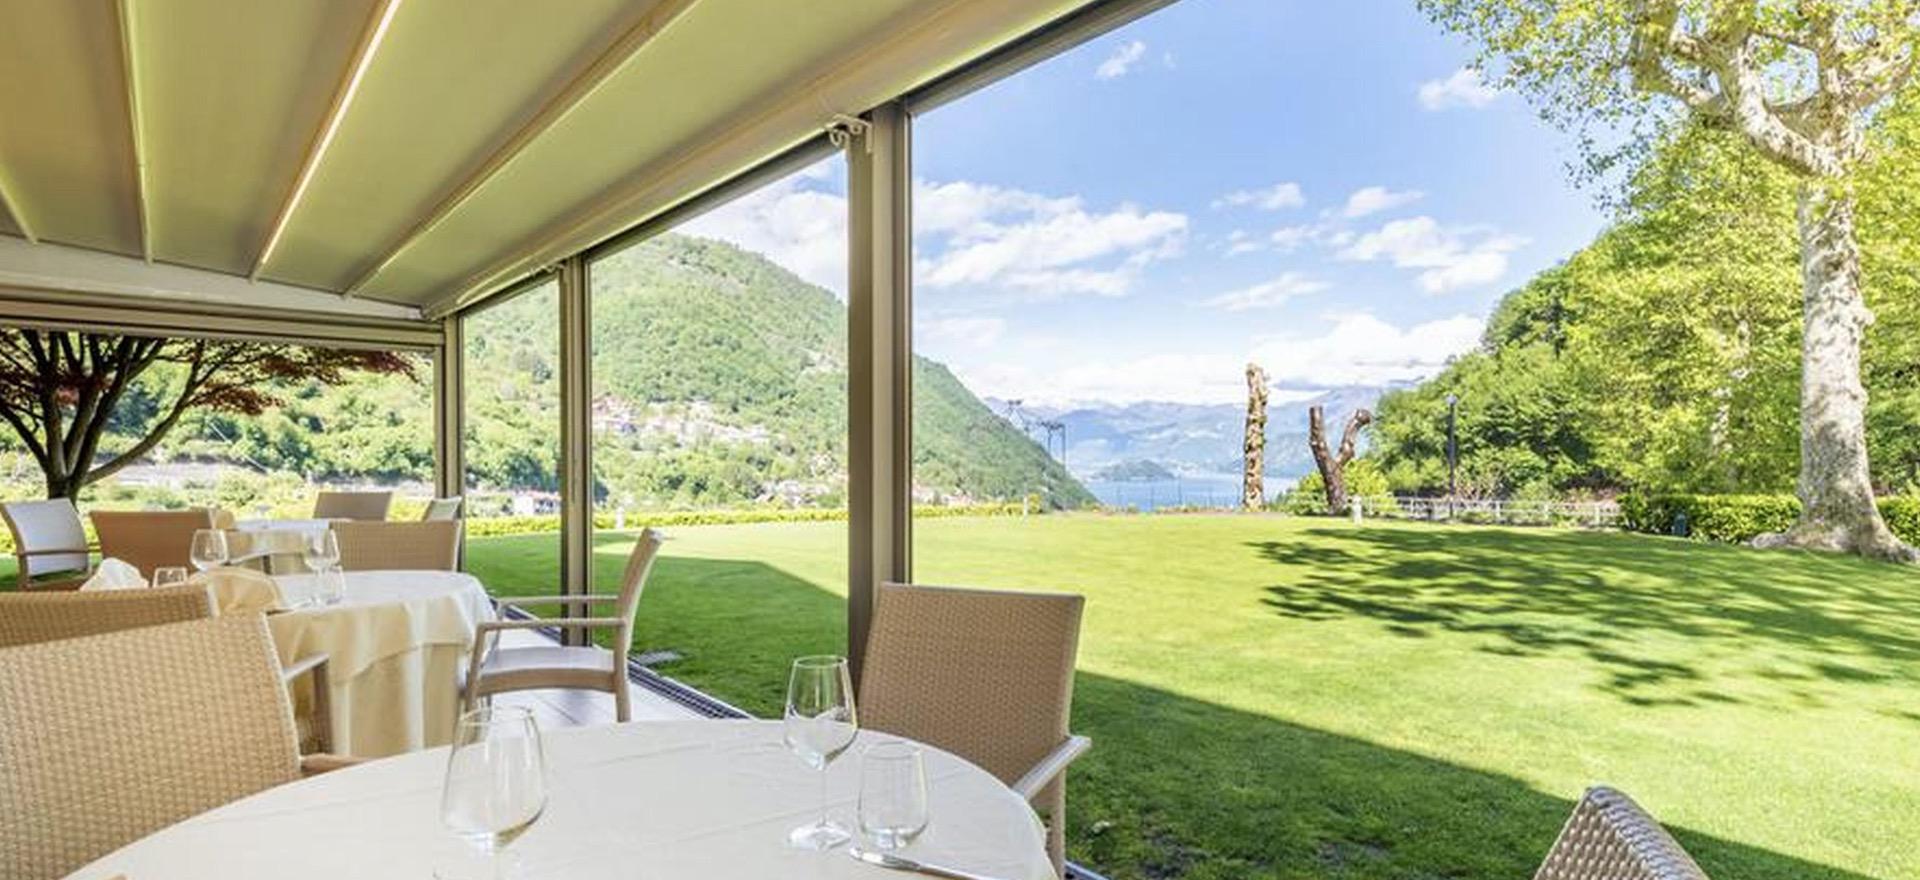 Agriturismo Lake Como and Lake Garda Agriturismo with restaurant and views of Lake Como